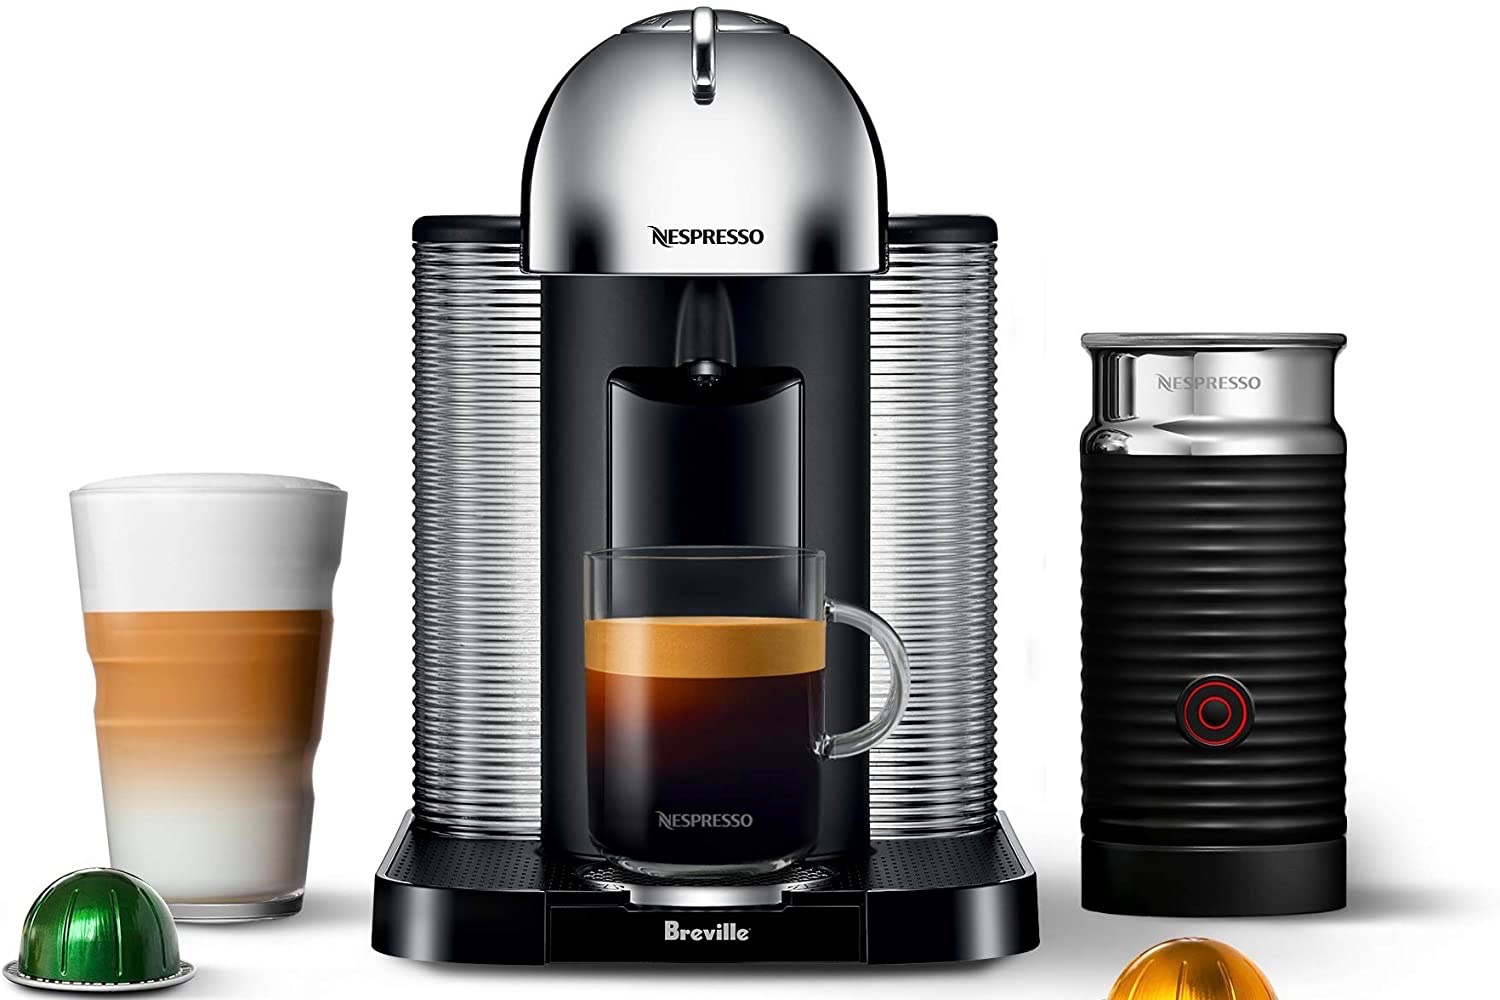 Alexa Robot Coffee Maker Brews Coffee, Speaks For Itself